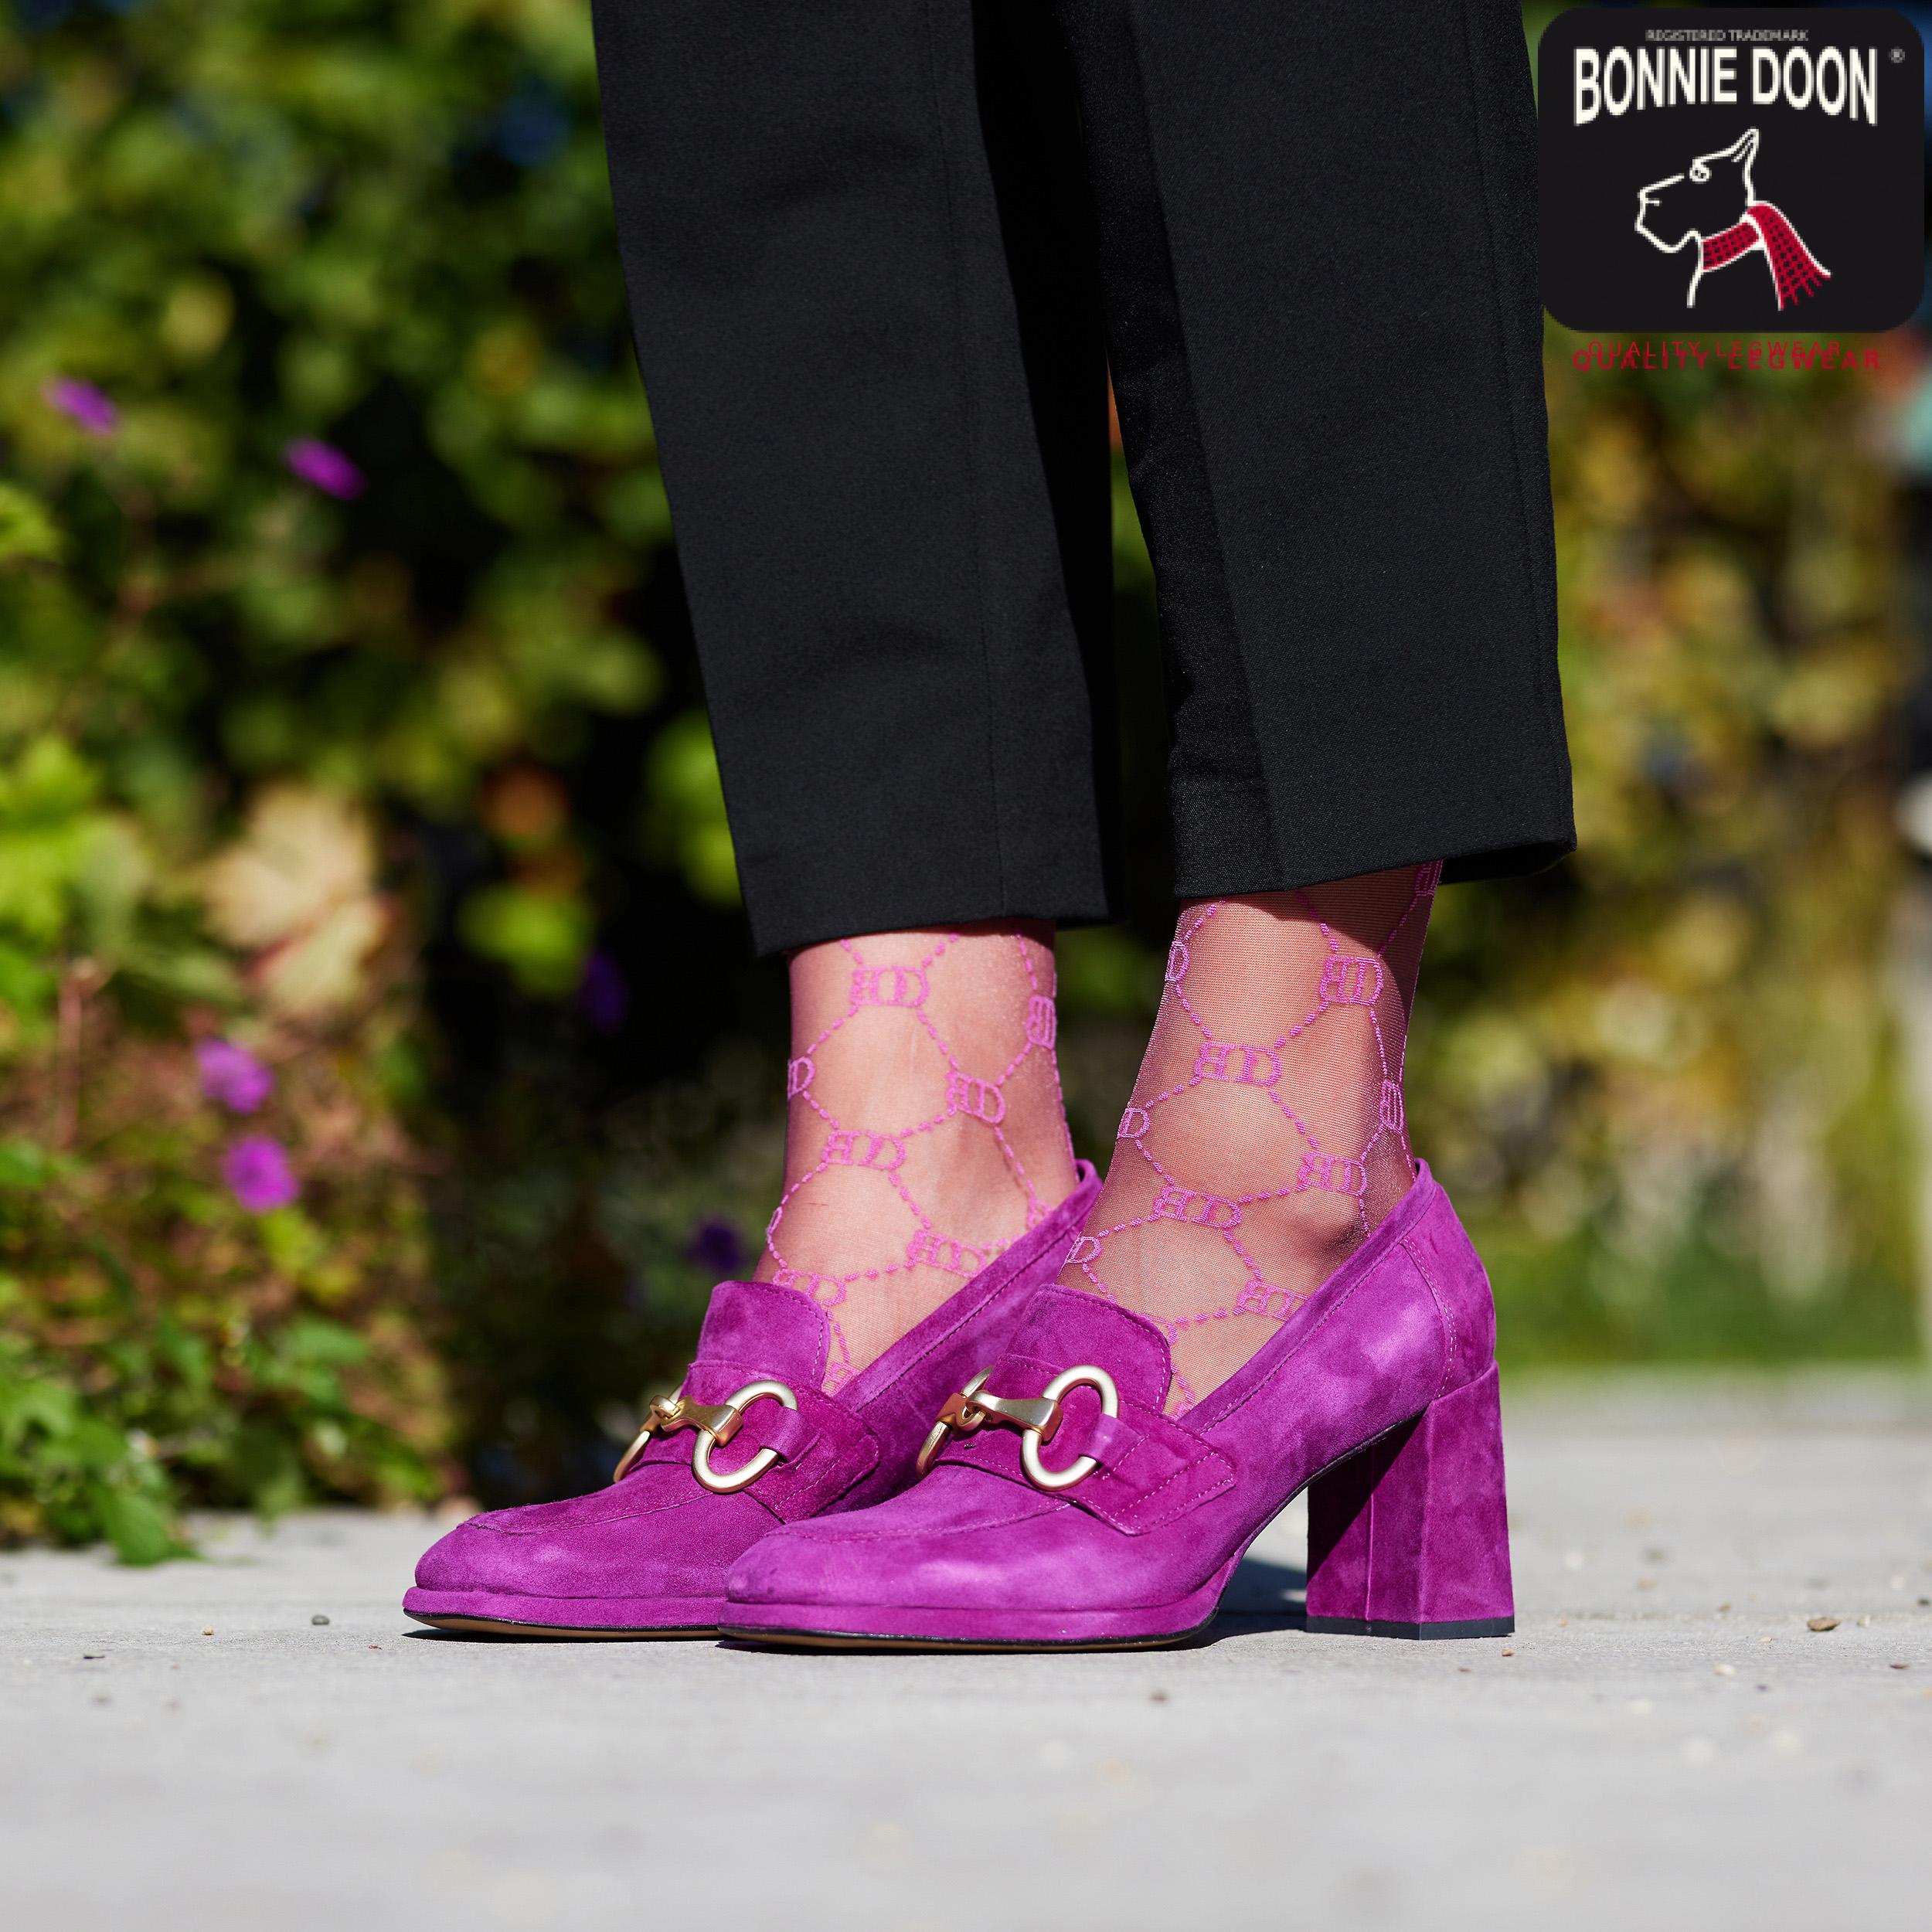 Bonnie Doon Knee-High Crushed violets